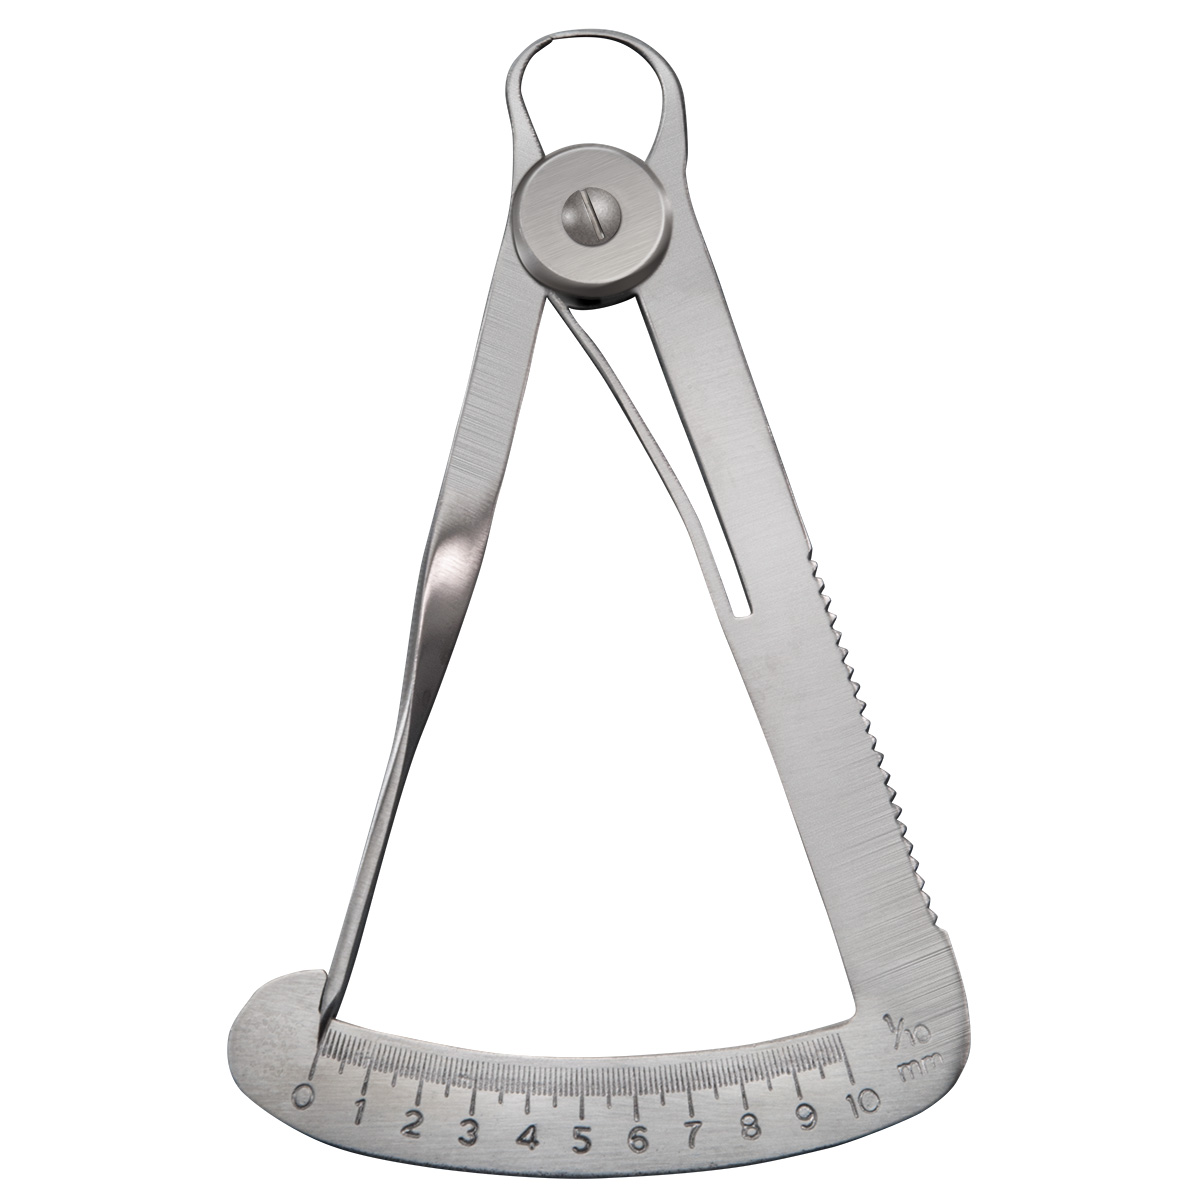 Dixieme gauge, measuring range 0 - 10 mm, length 100 mm